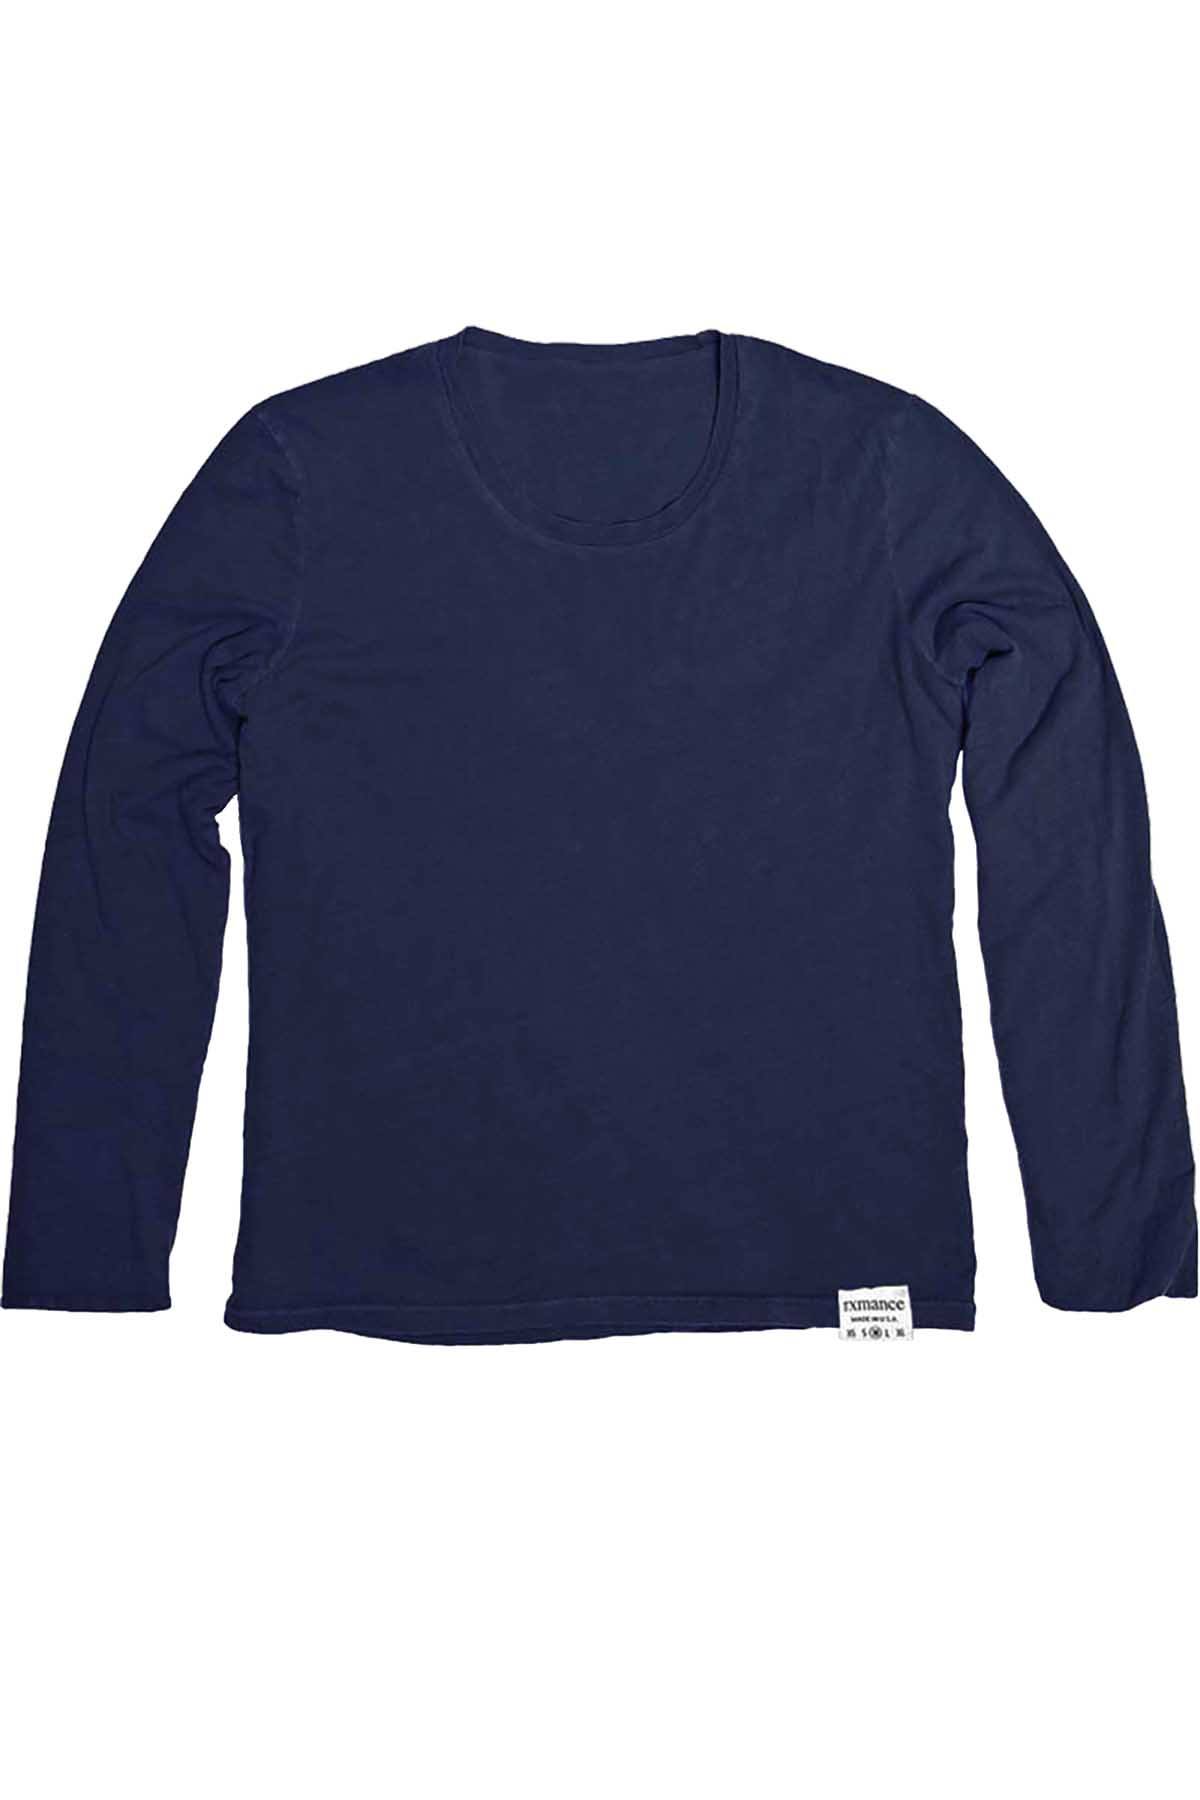 Rxmance Unisex Navy Reversible Long-Sleeve Shirt